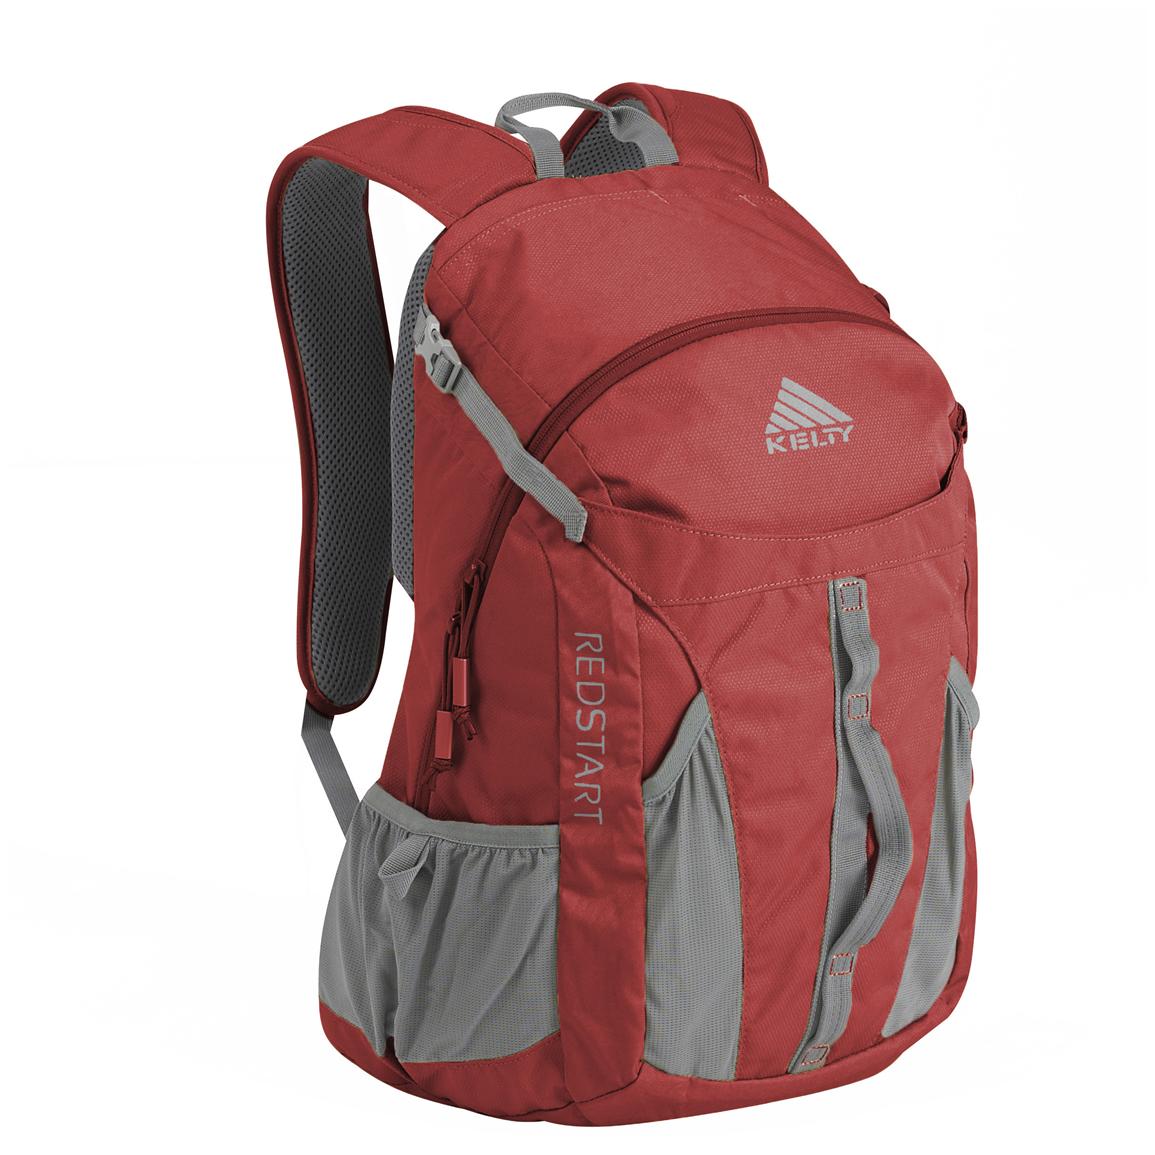 Kelty Redstart 28 Backpack - 597557, Camping Backpacks at Sportsman's Guide